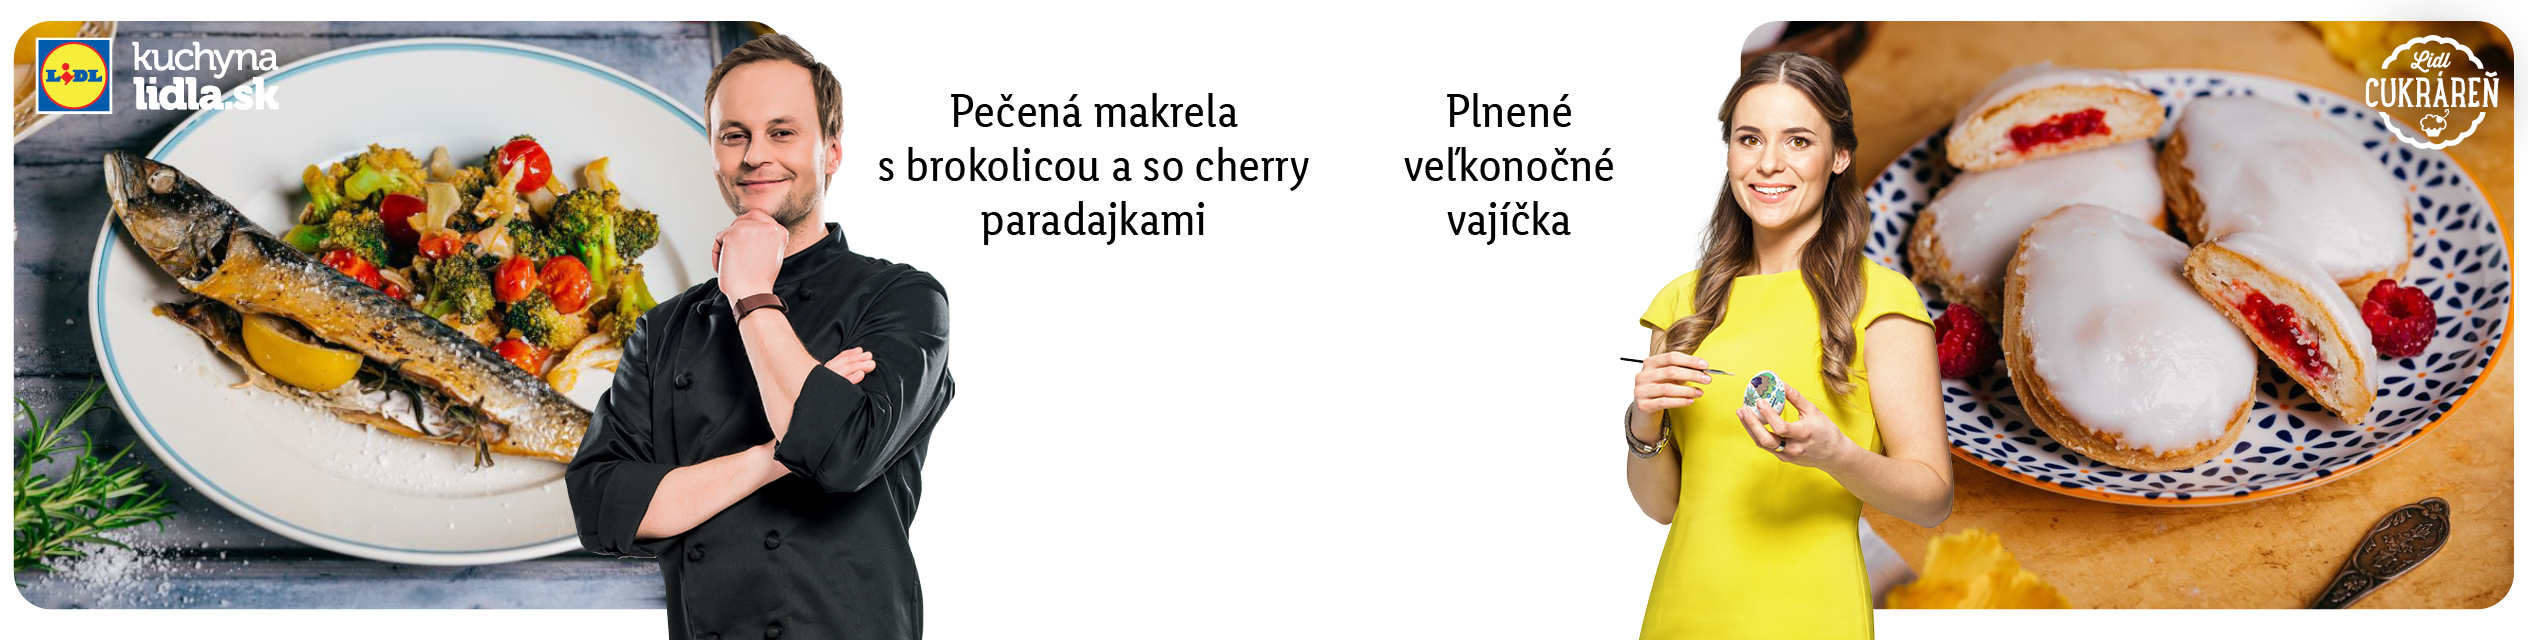 Recepty na kuchynalidla.sk